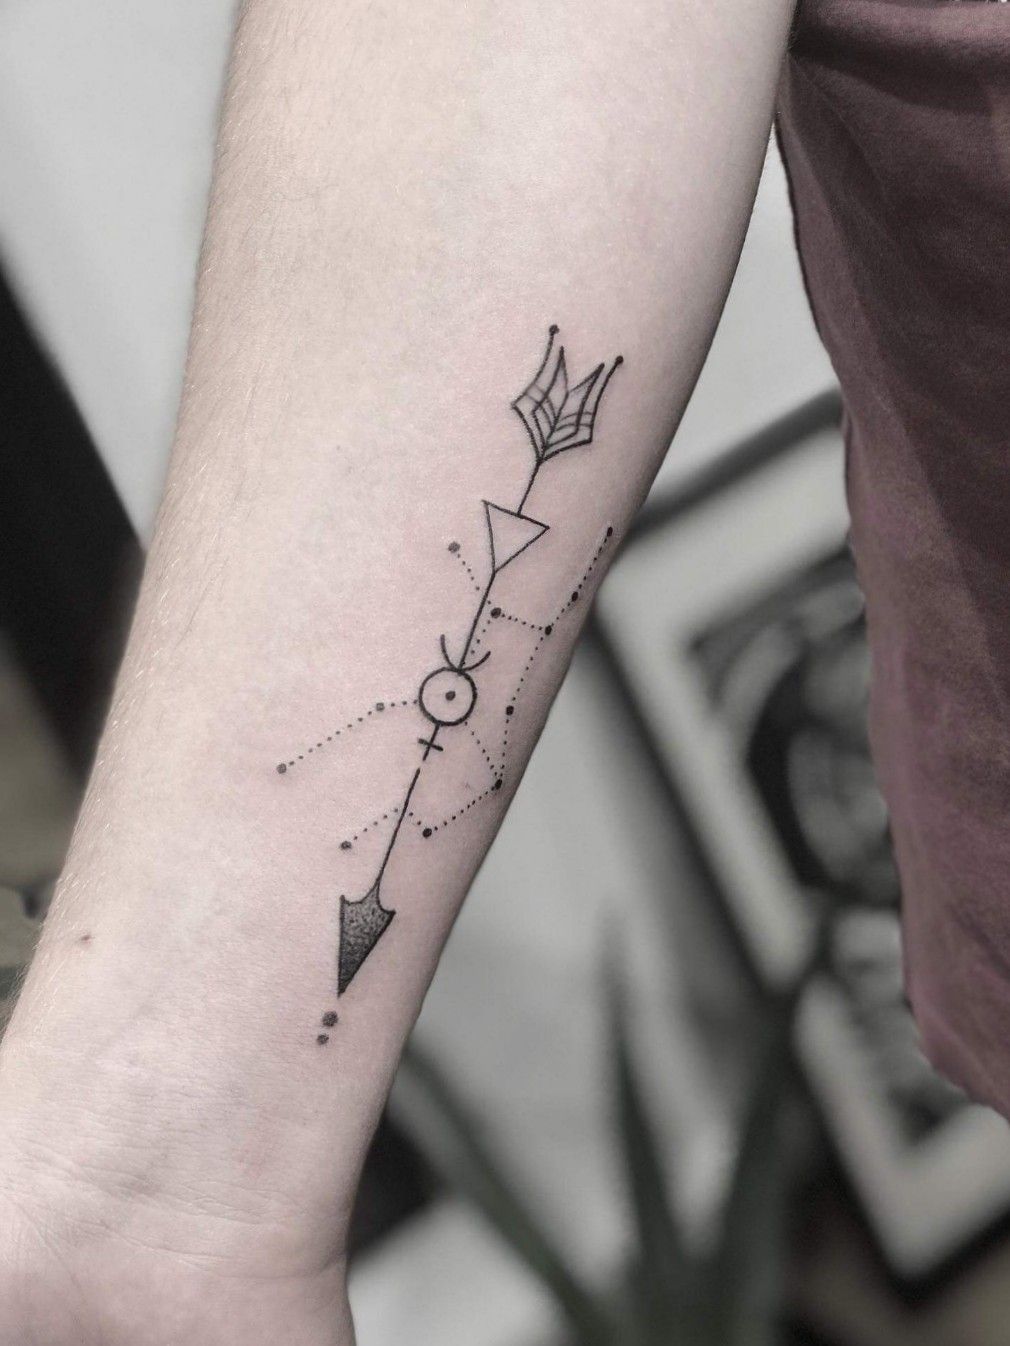 Share 96 about virgo constellation tattoo super hot  indaotaonec